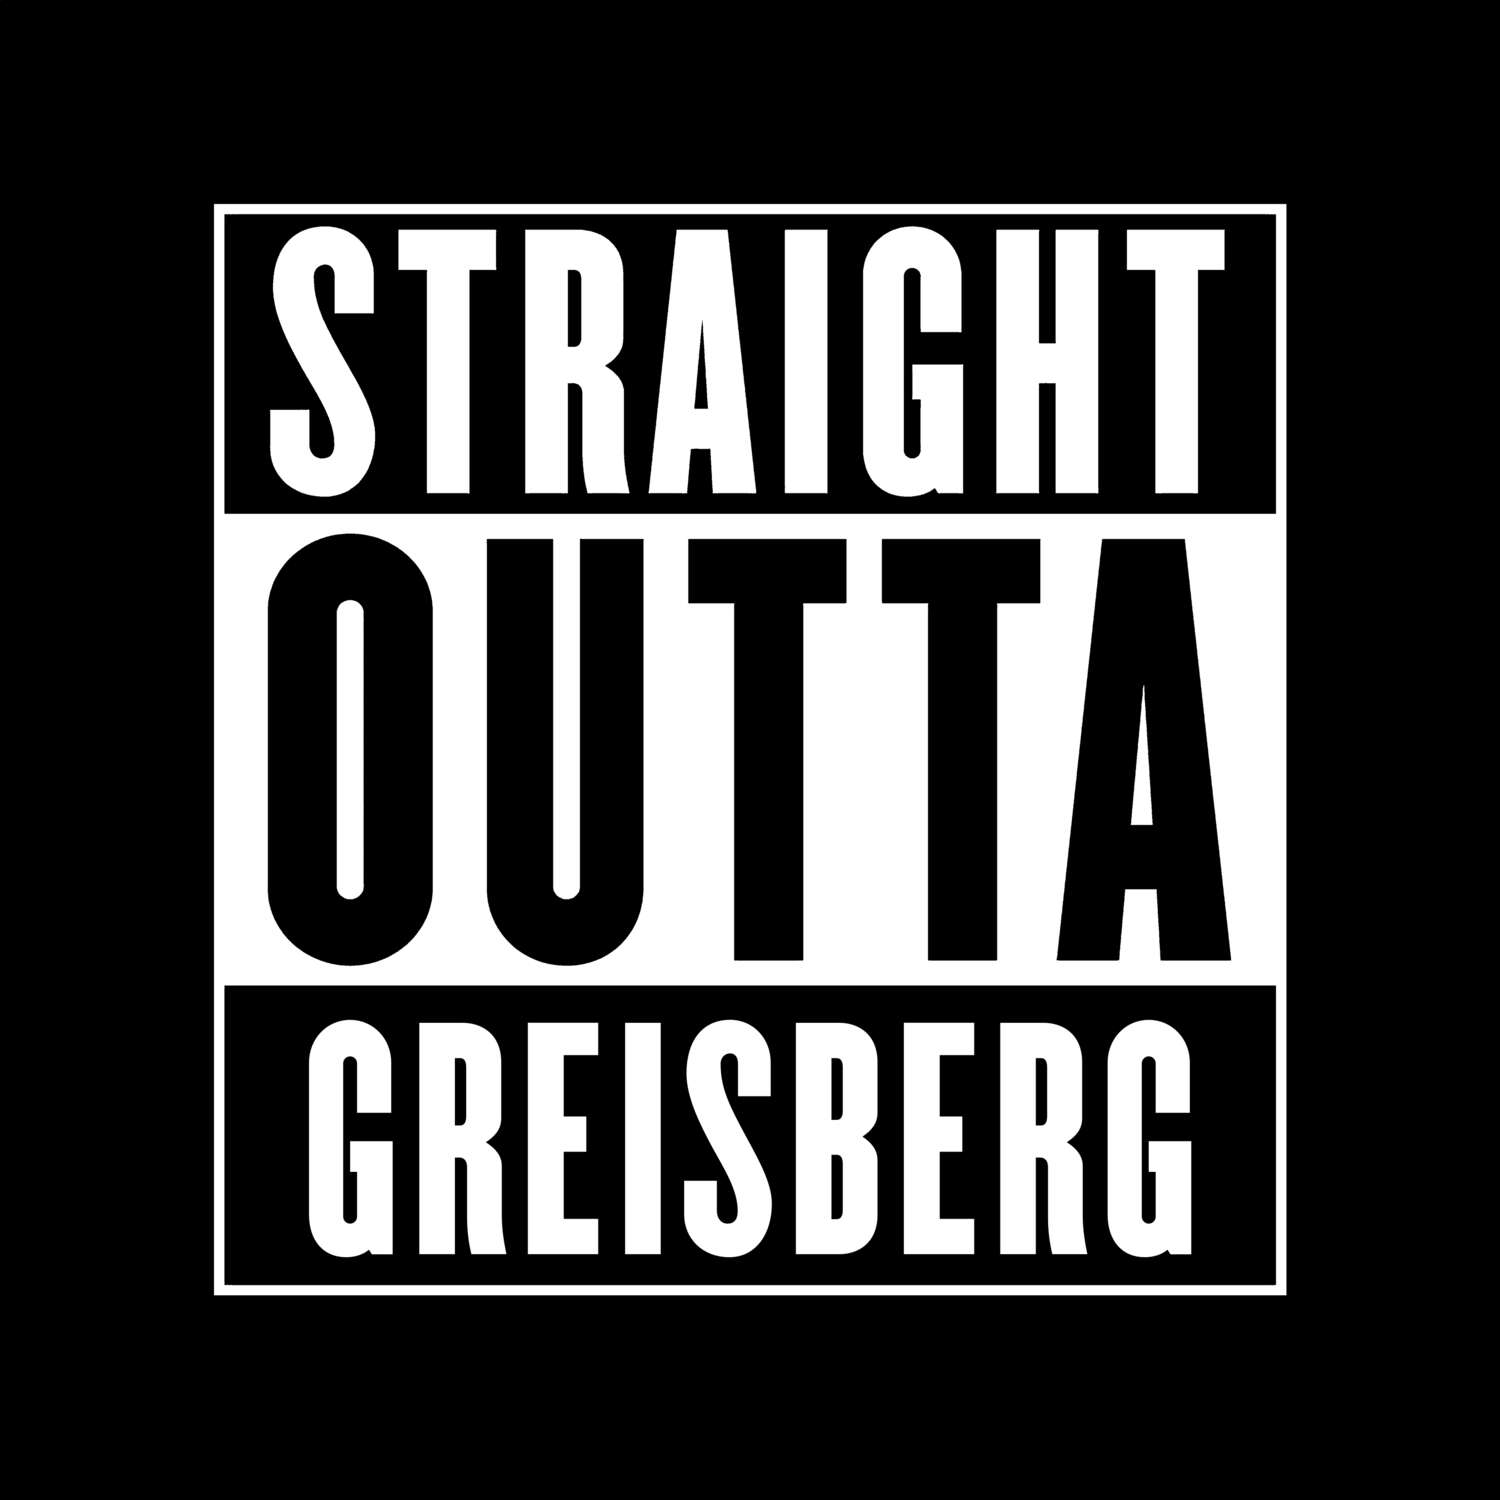 Greisberg T-Shirt »Straight Outta«